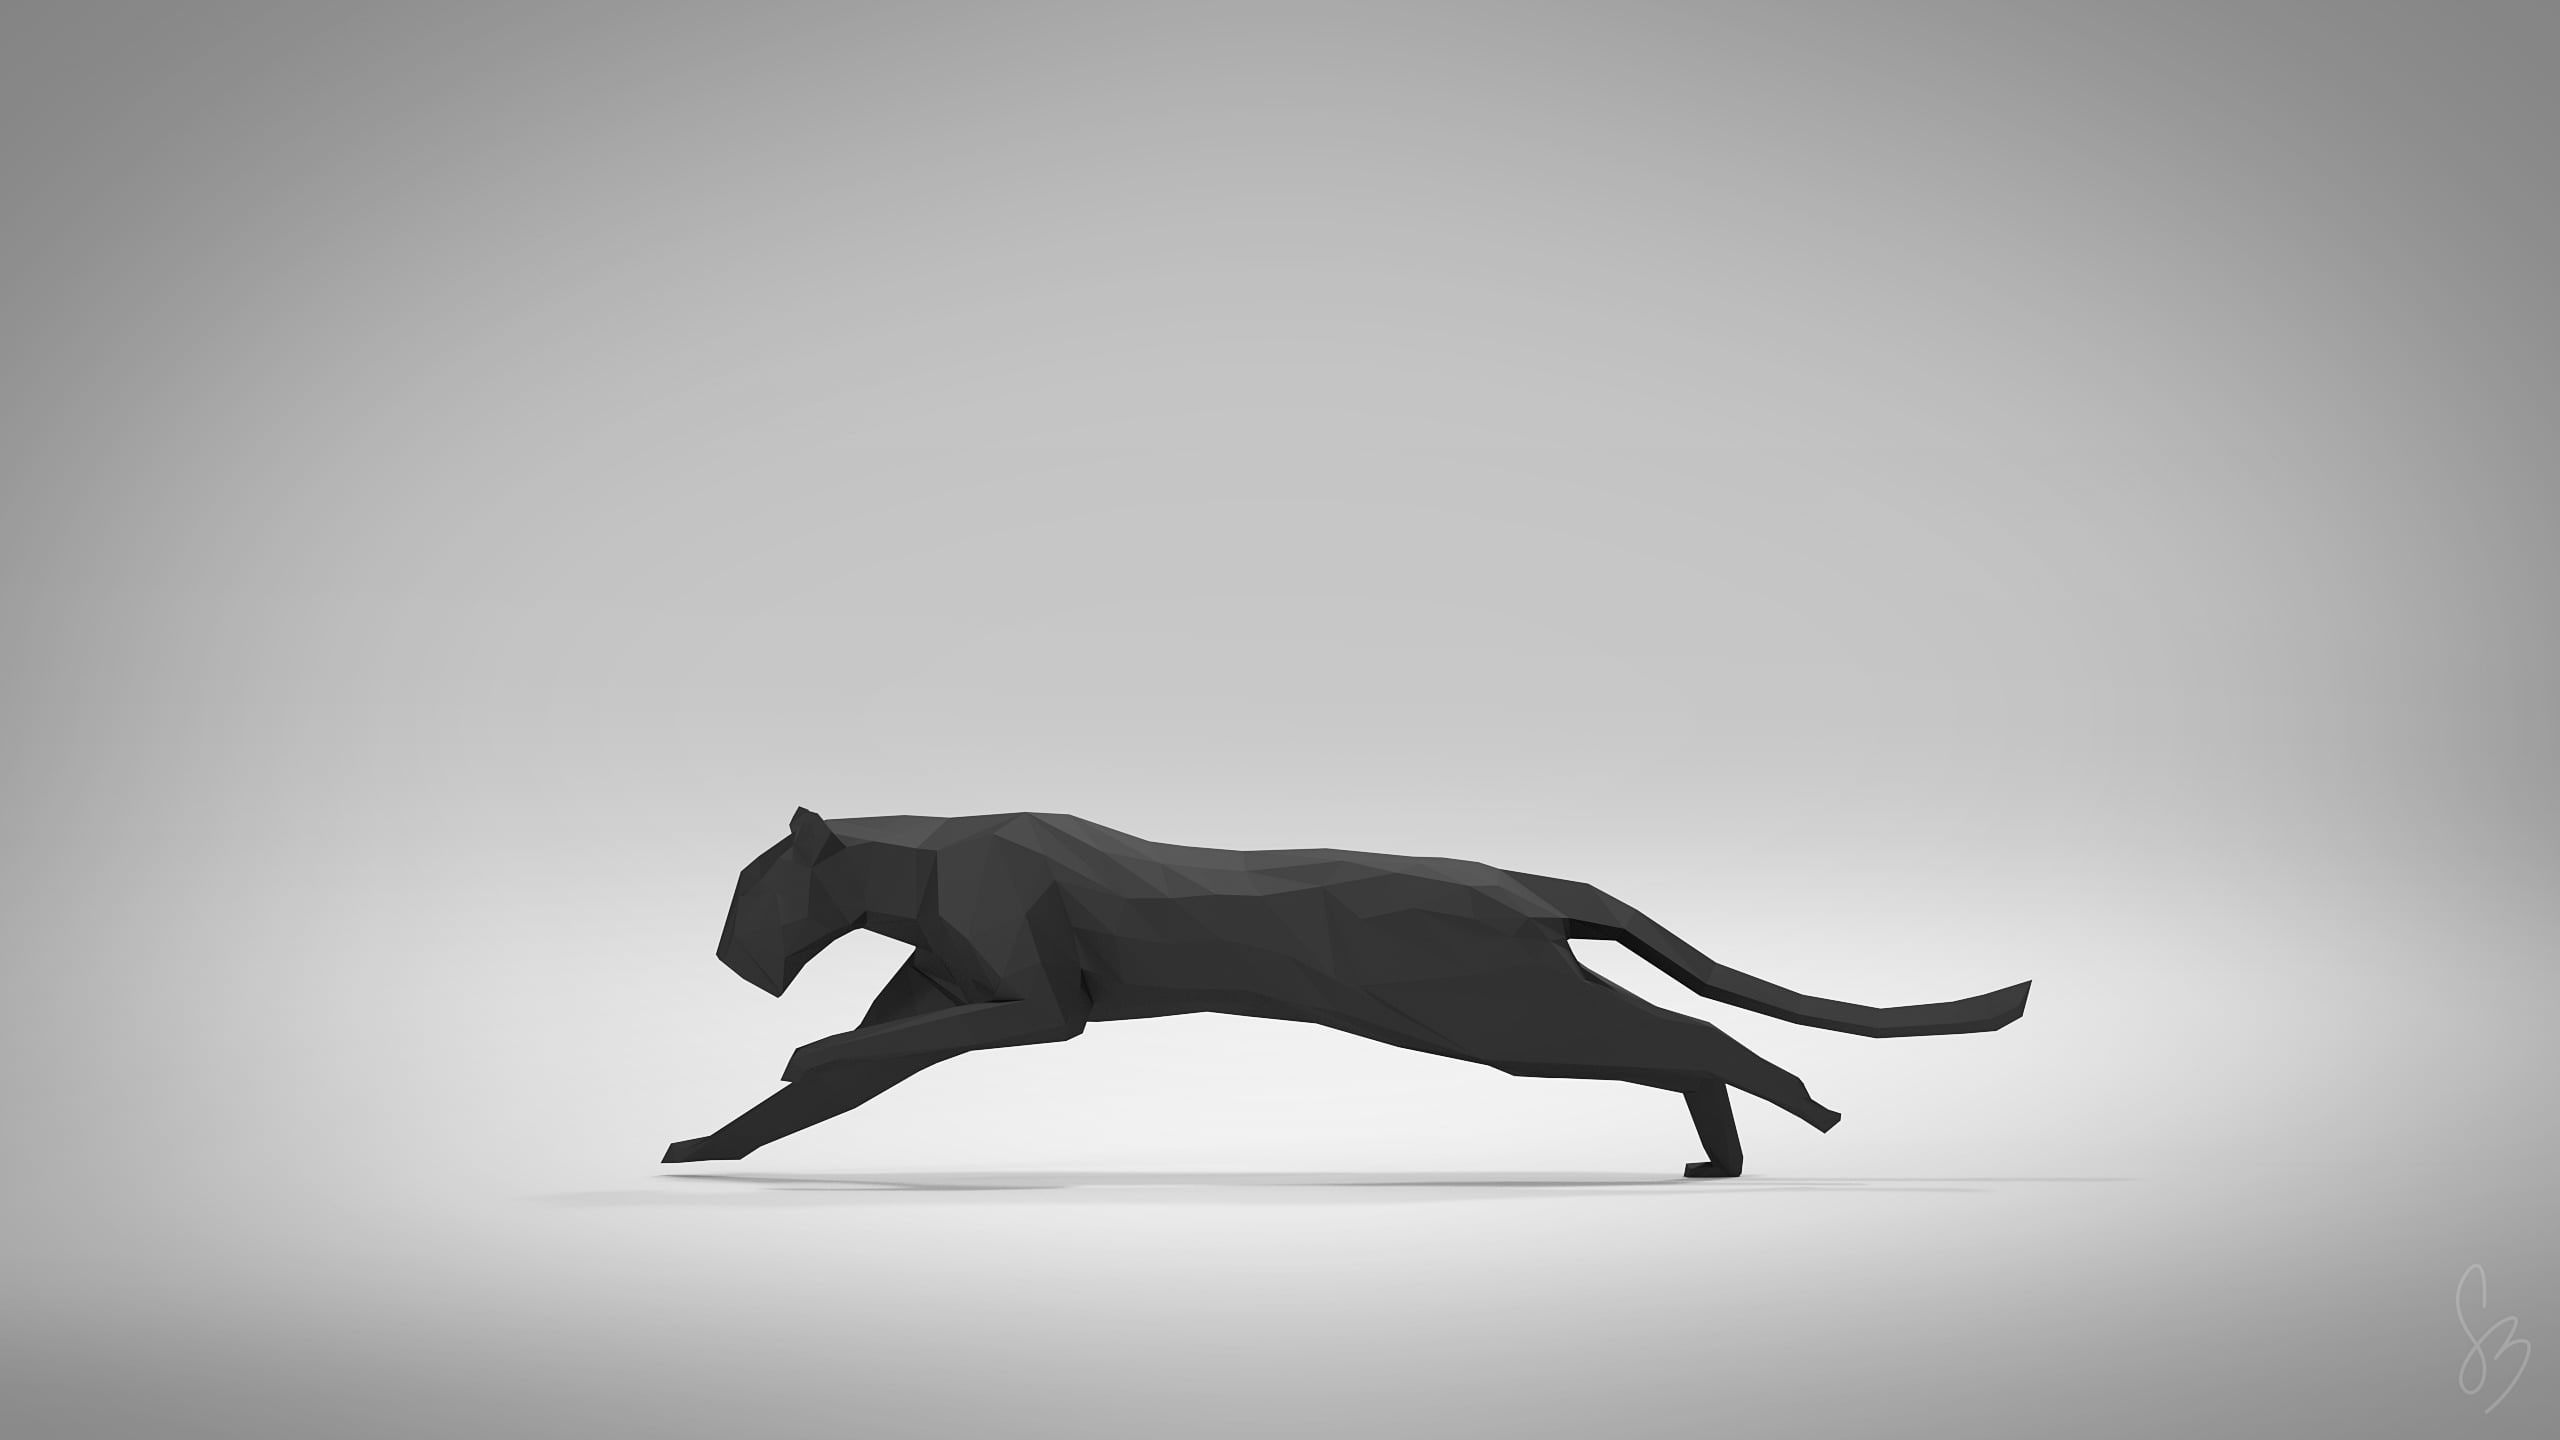 Wallpaper Black Jaguar Clip Art, Black Panther Figurine